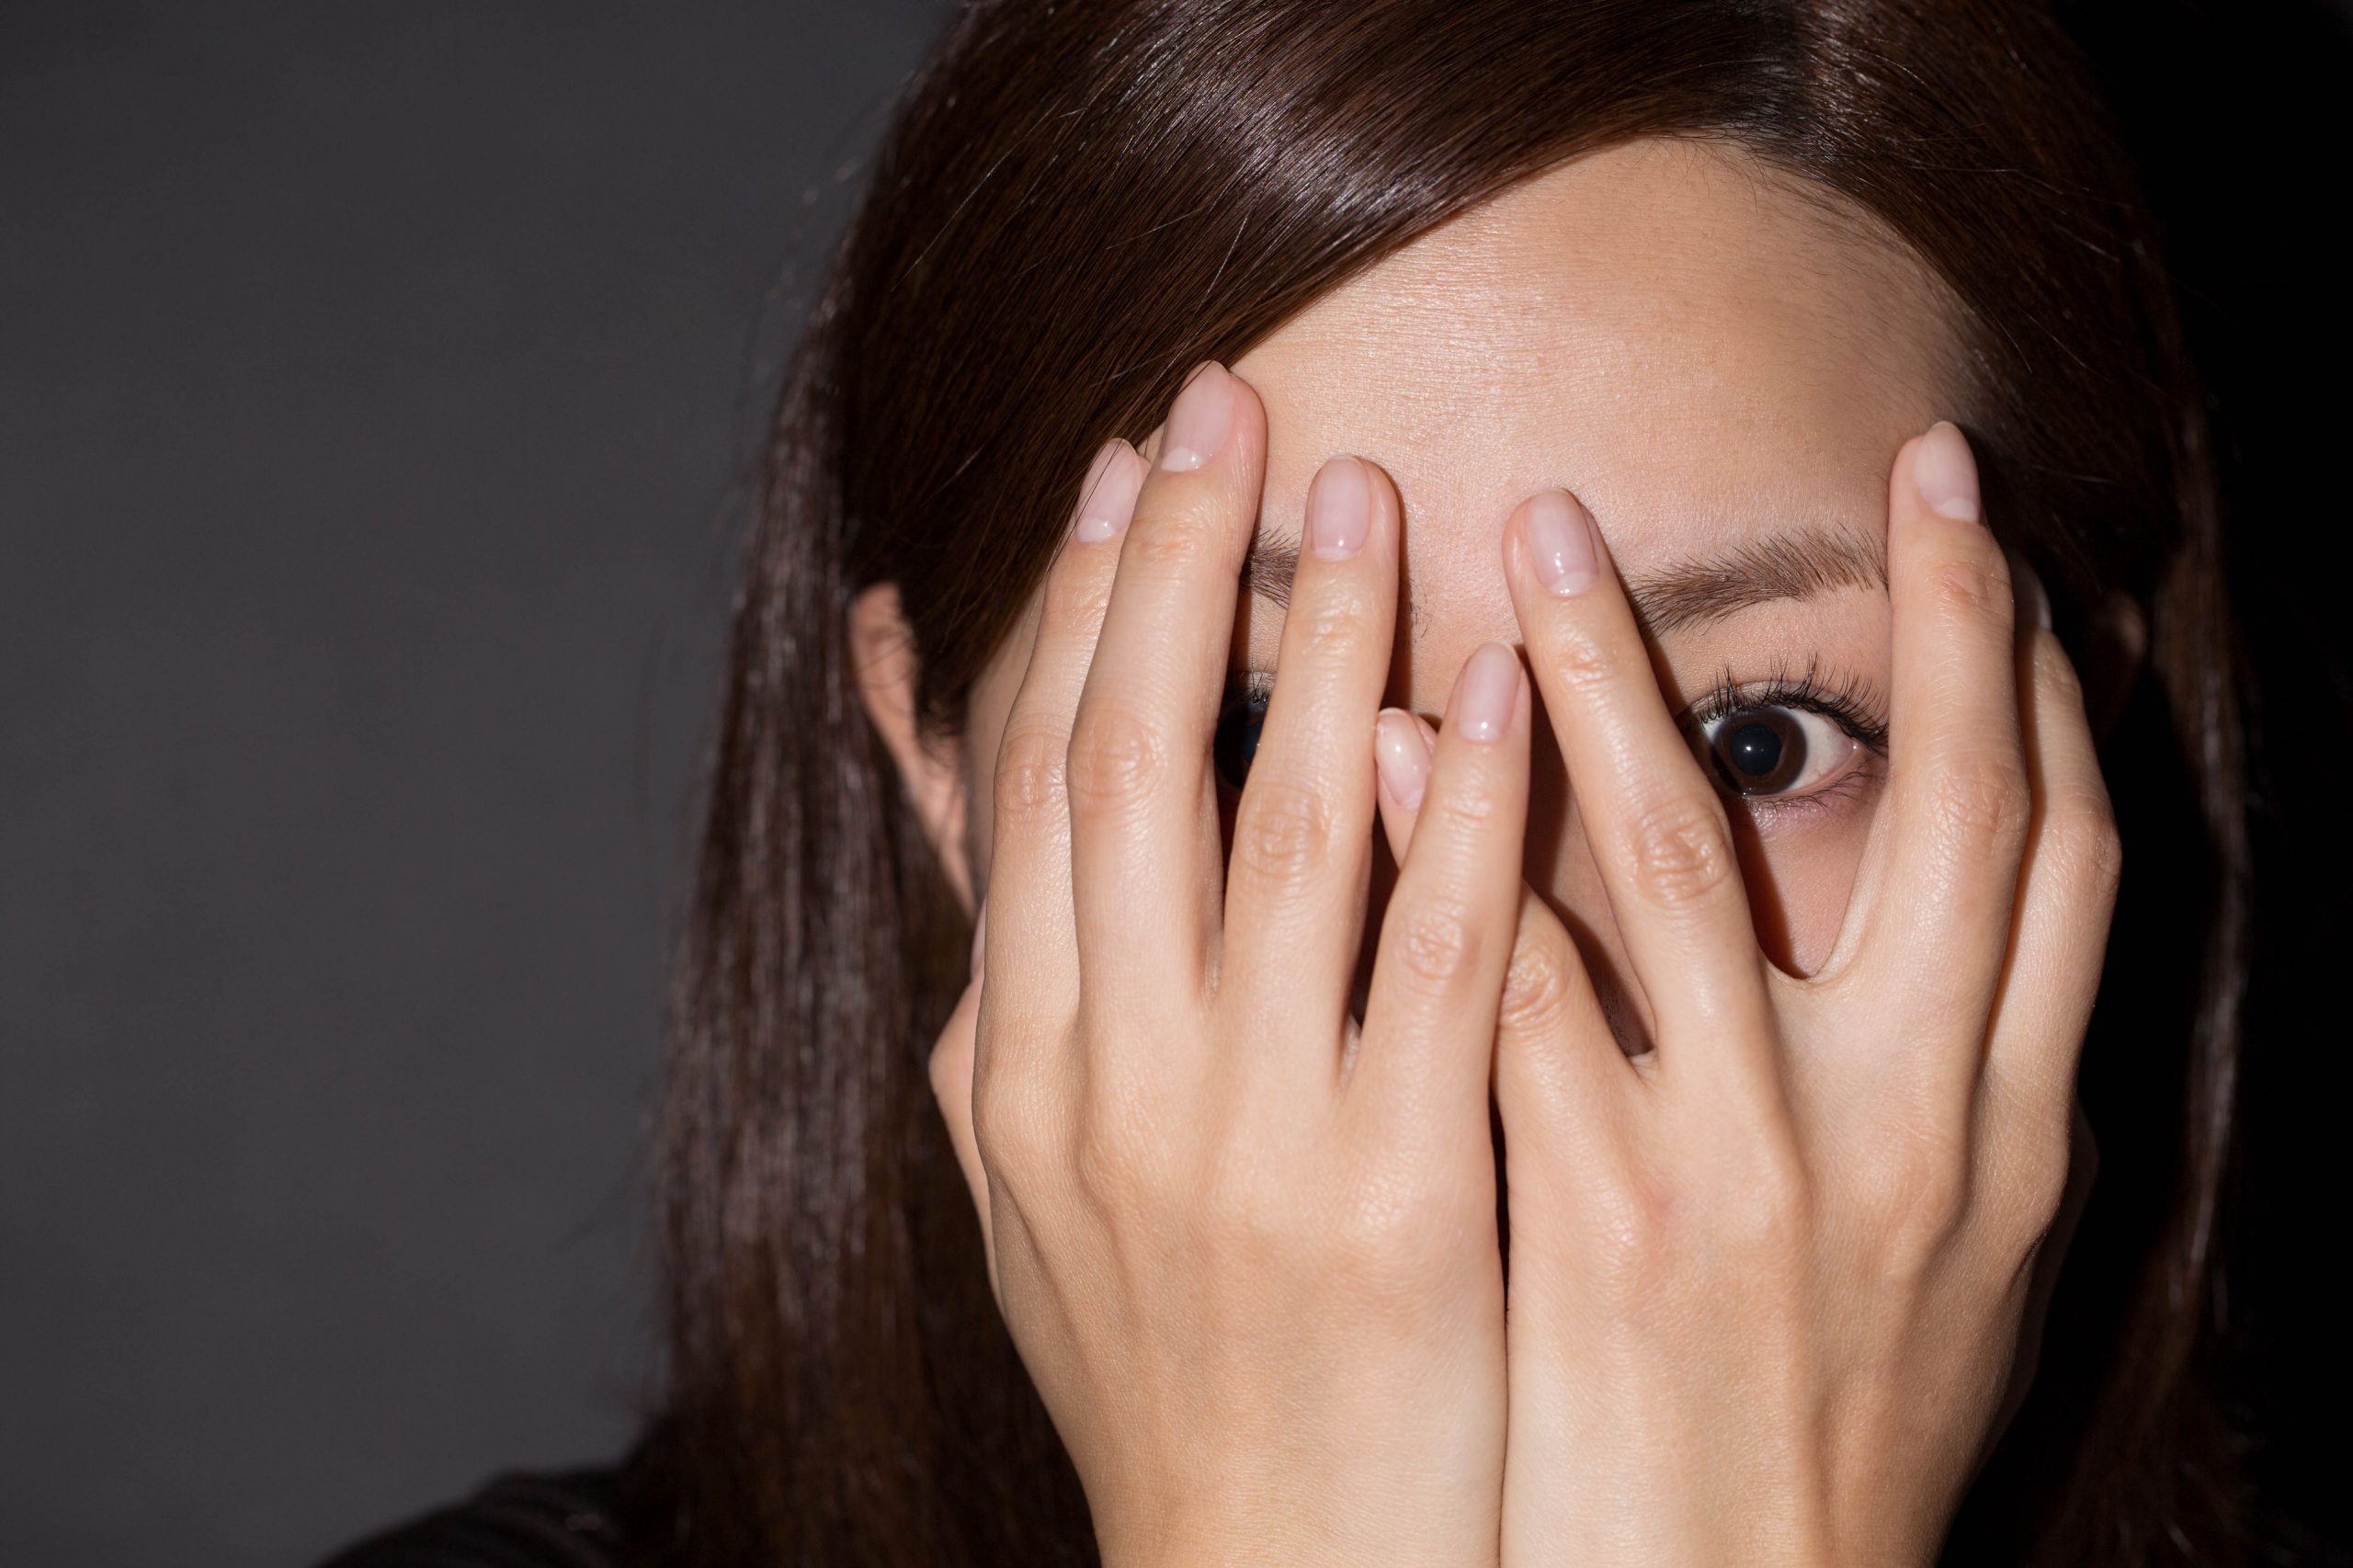 Trembling, Shaking, &  Other Symptoms of Panic Attacks